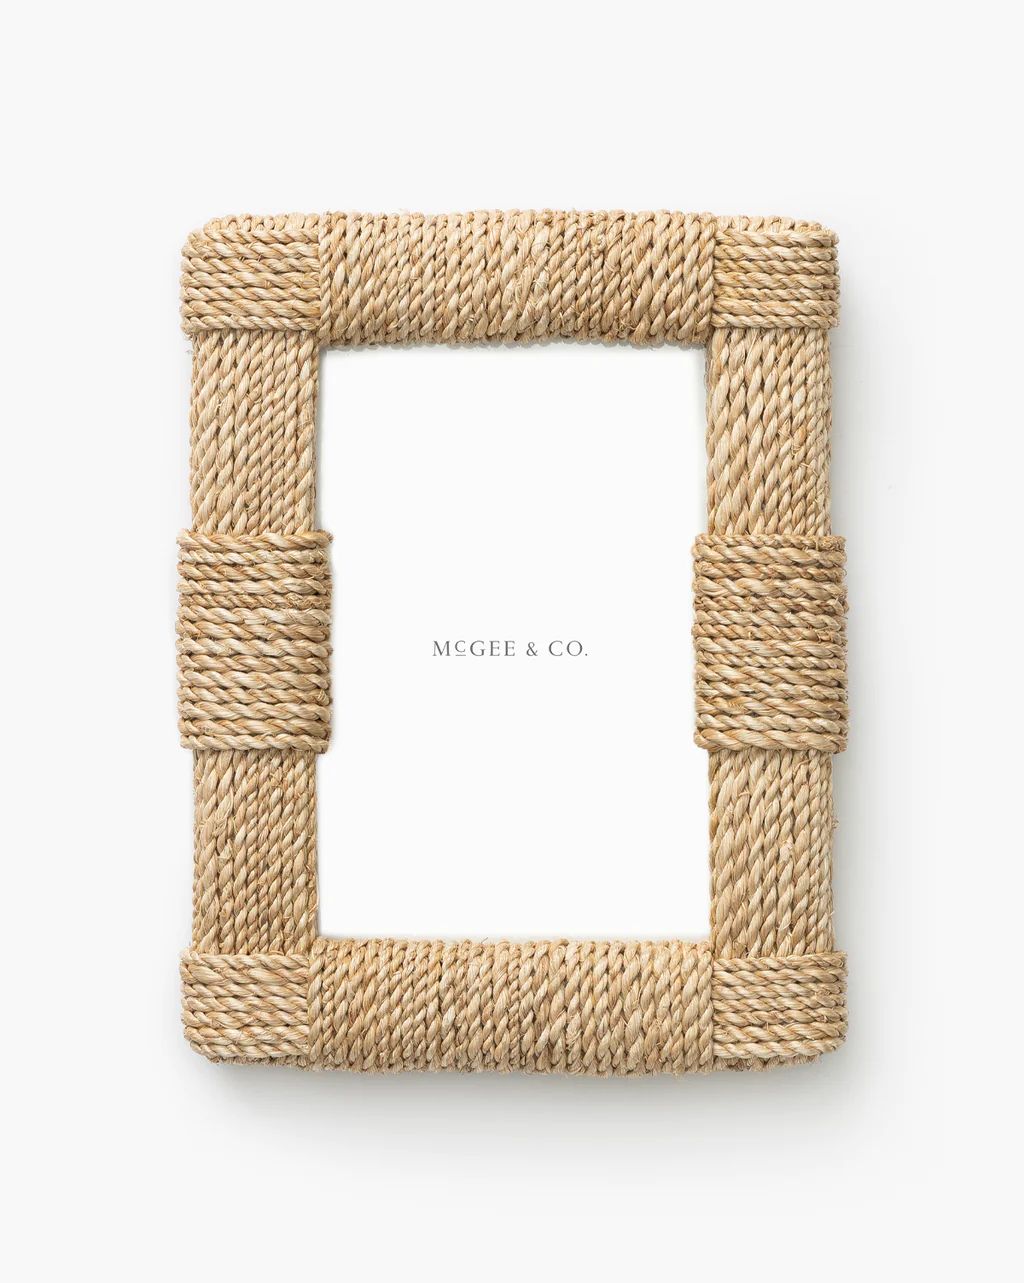 Abaca Rope Frame | McGee & Co.